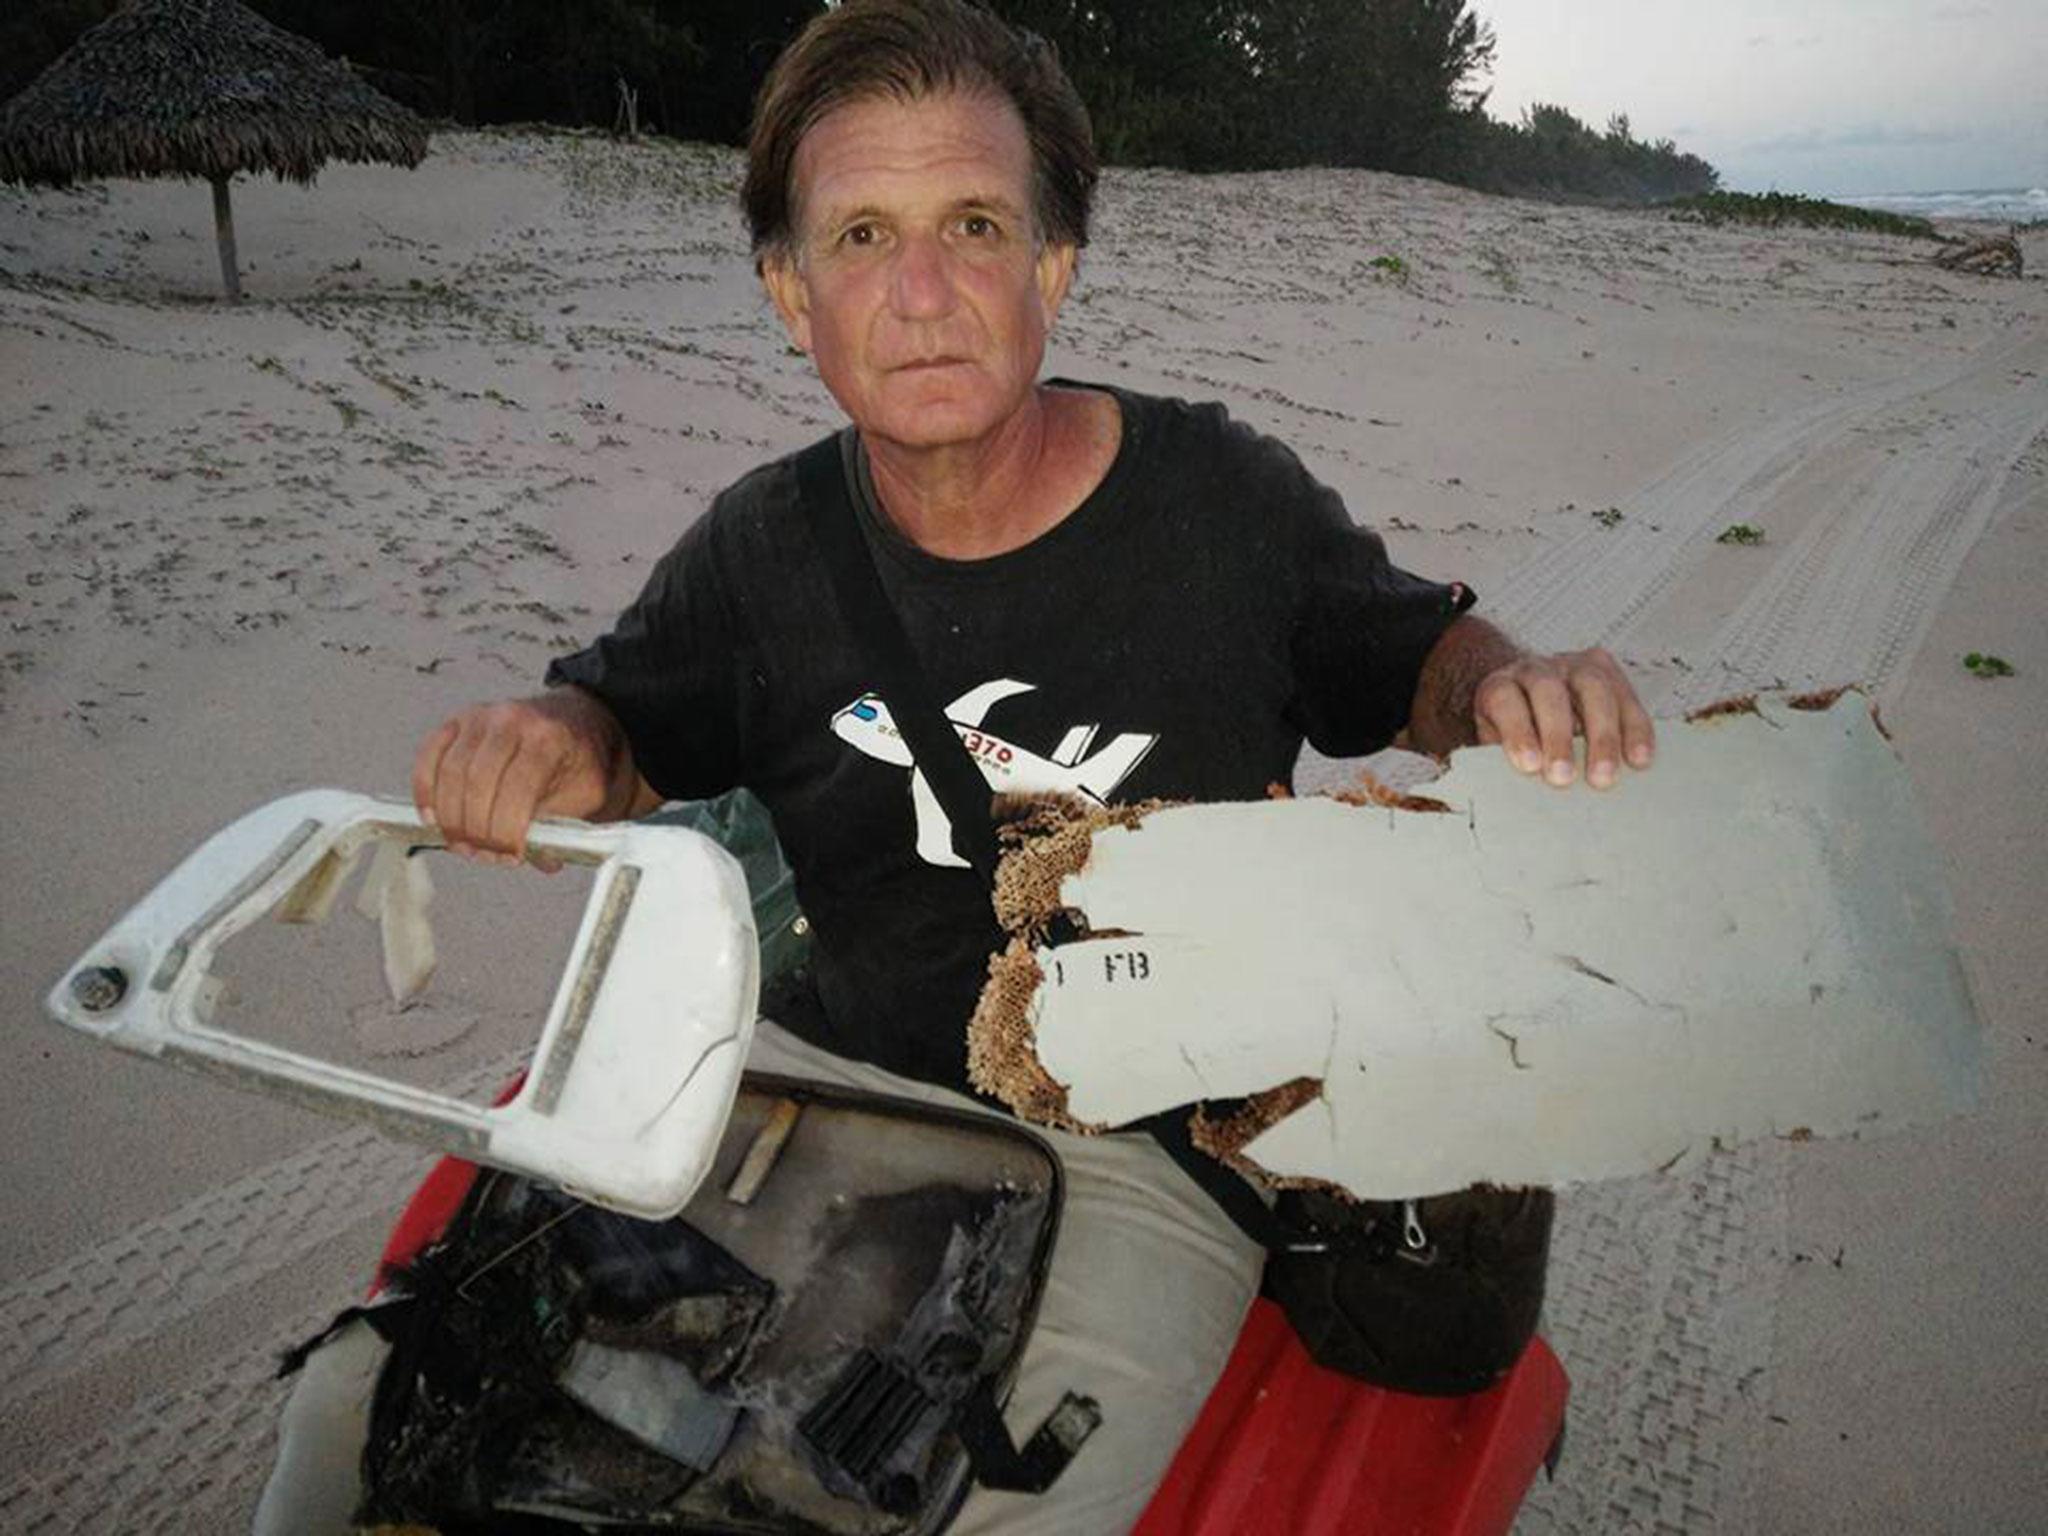 The latest debris was found by adventurer Blaine Gibson on a beach in Madagascar